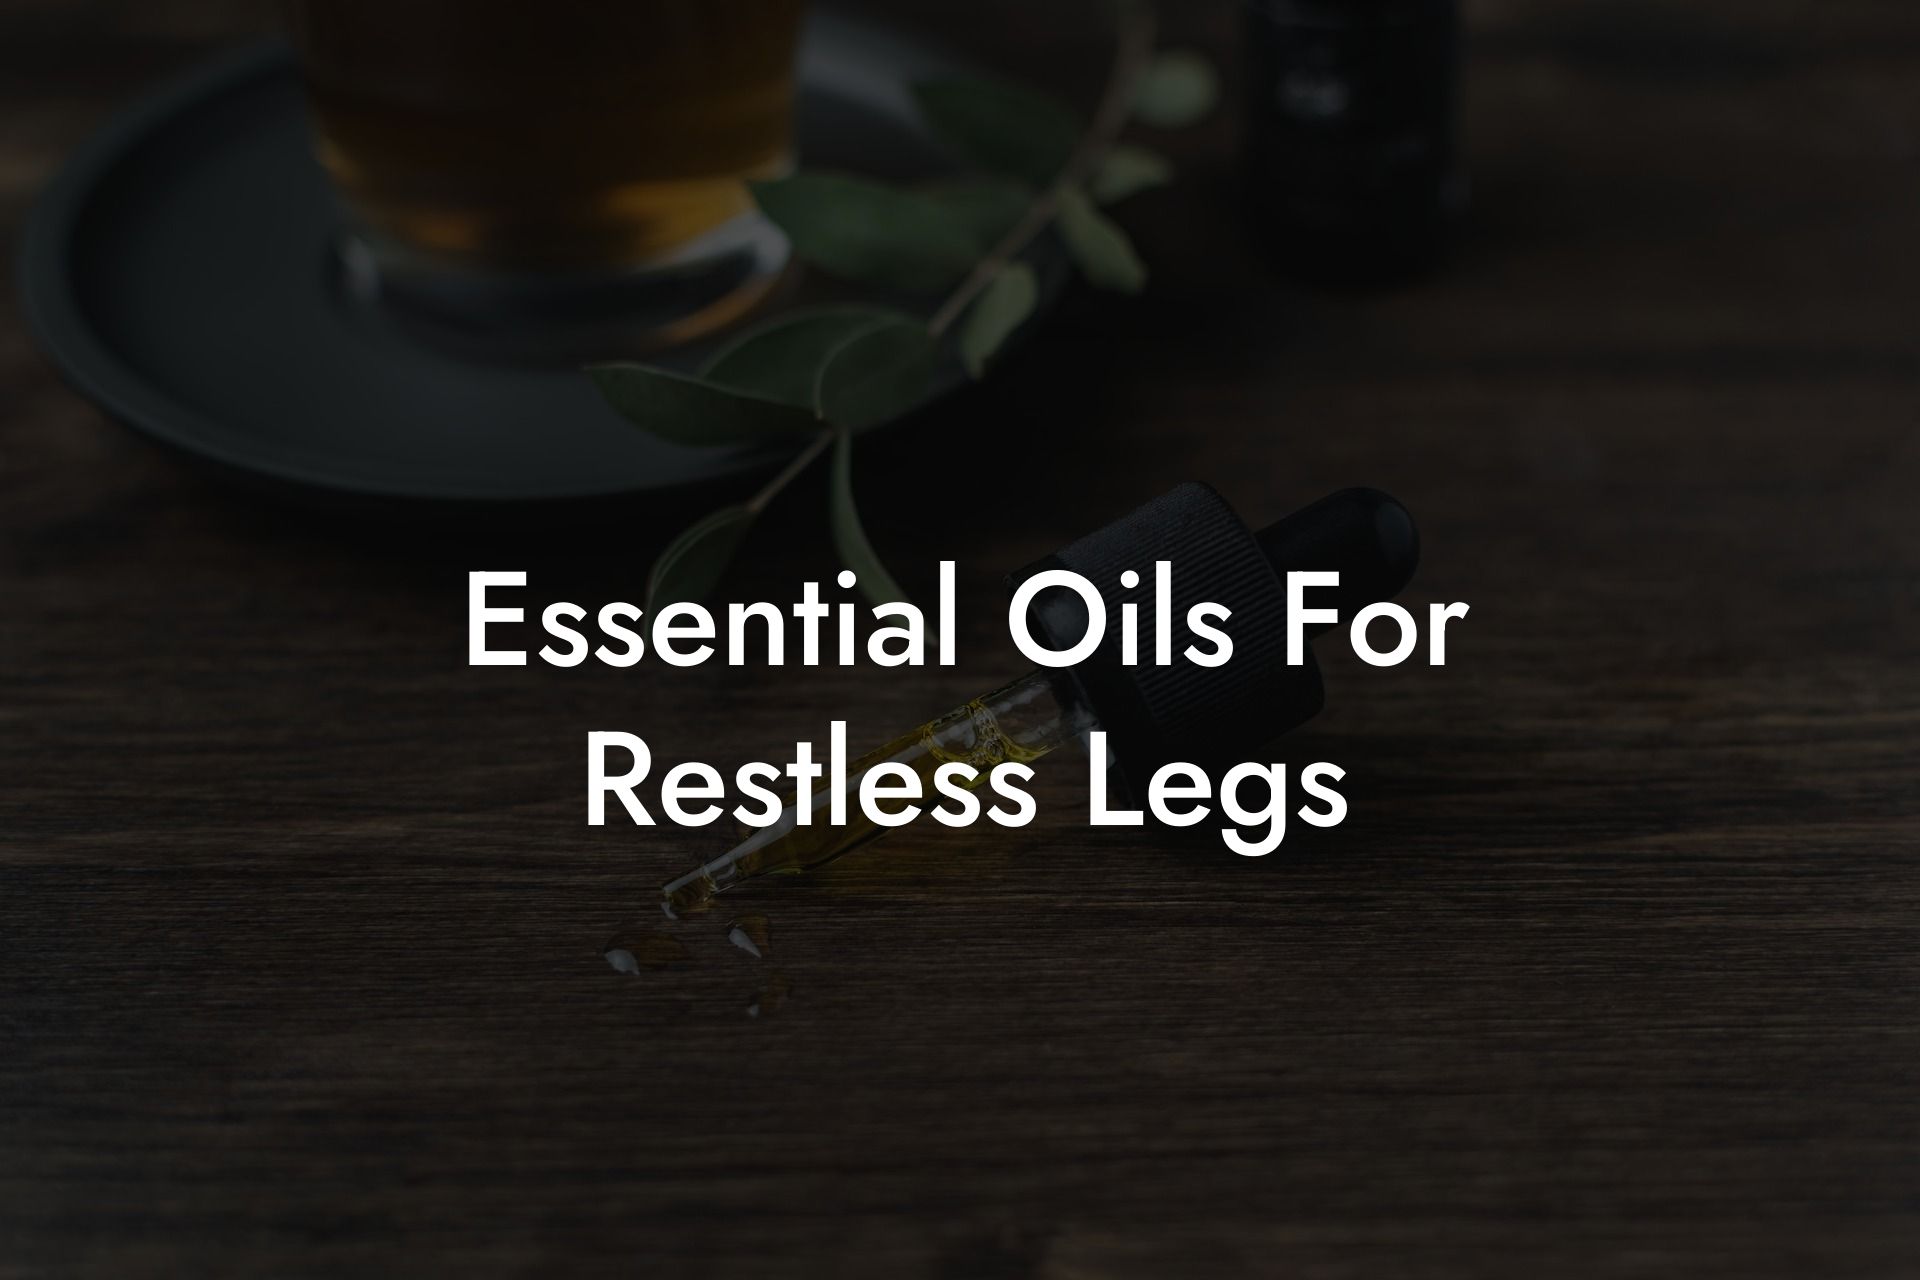 Essential Oils For Restless Legs